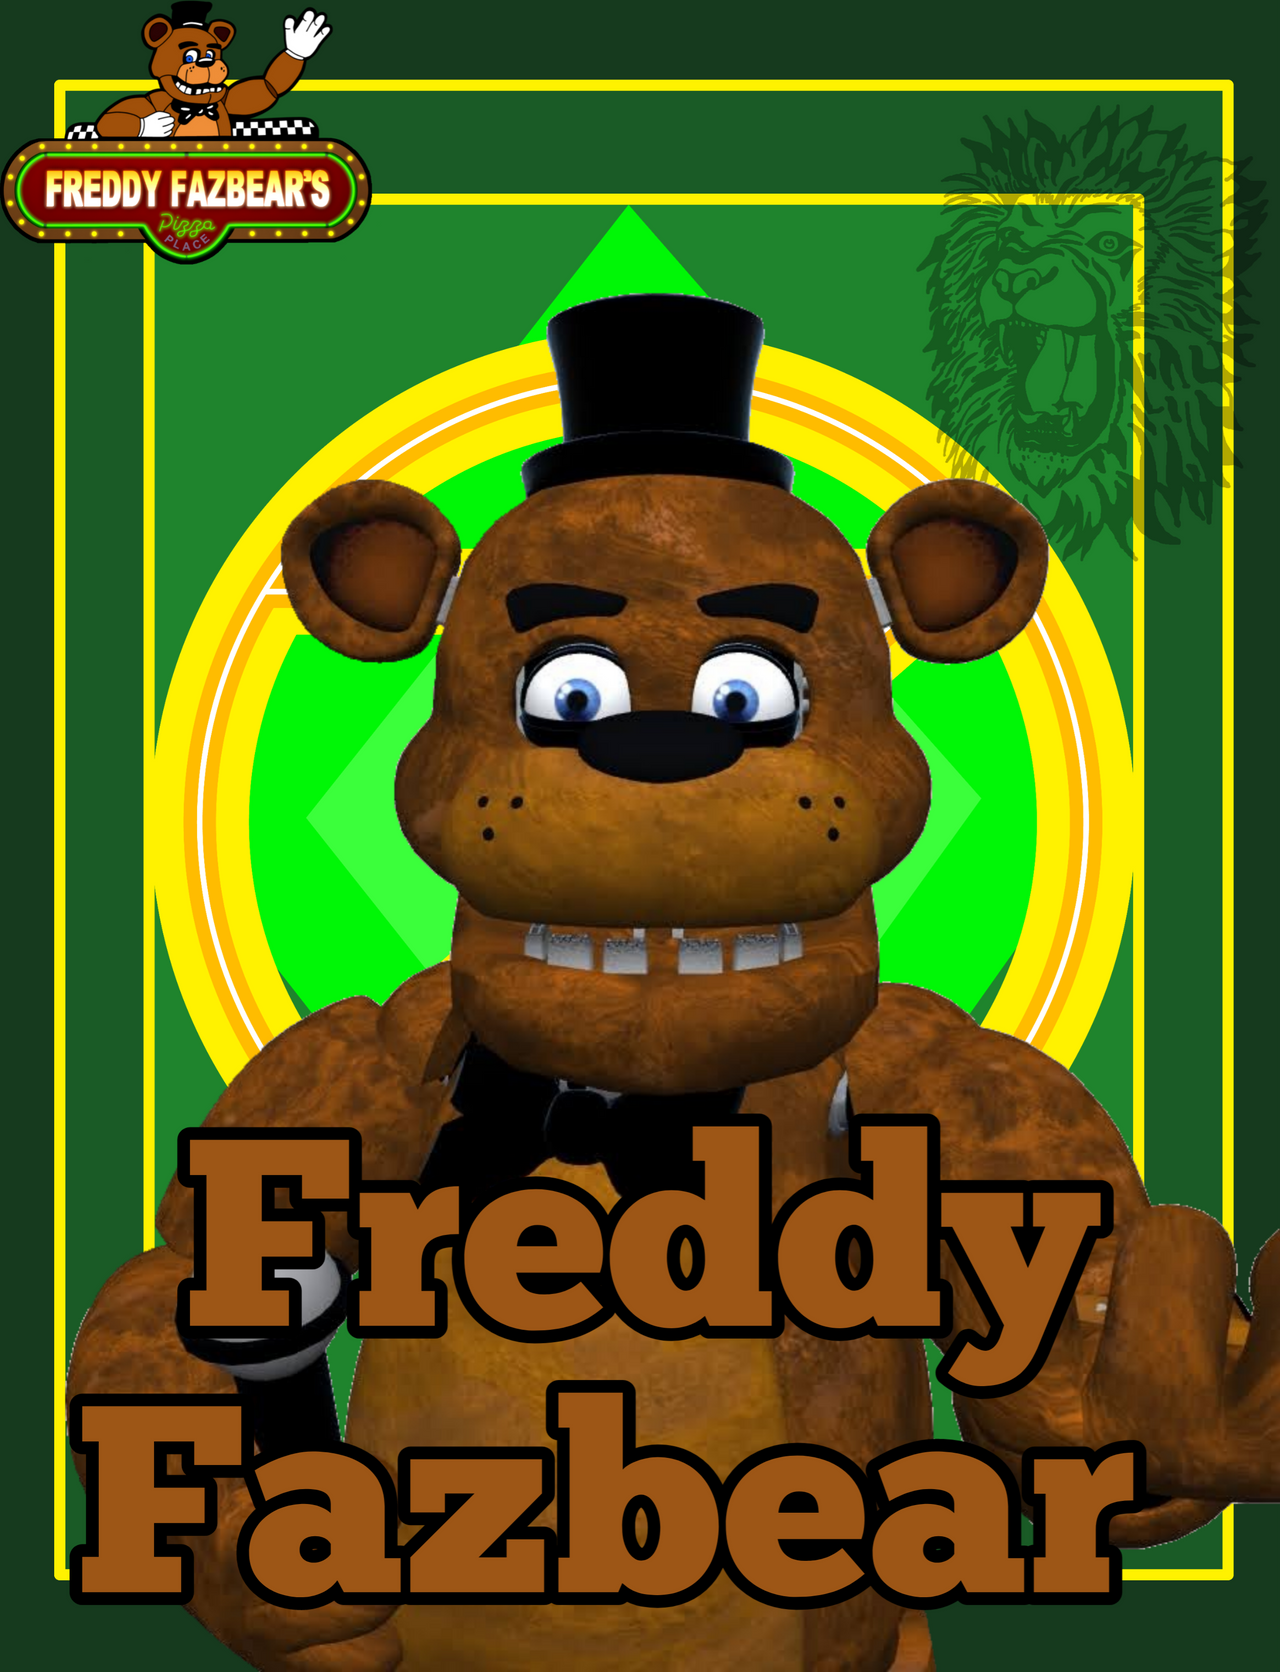 Fixed Nightmare Fredbear by Cheems2912 on DeviantArt